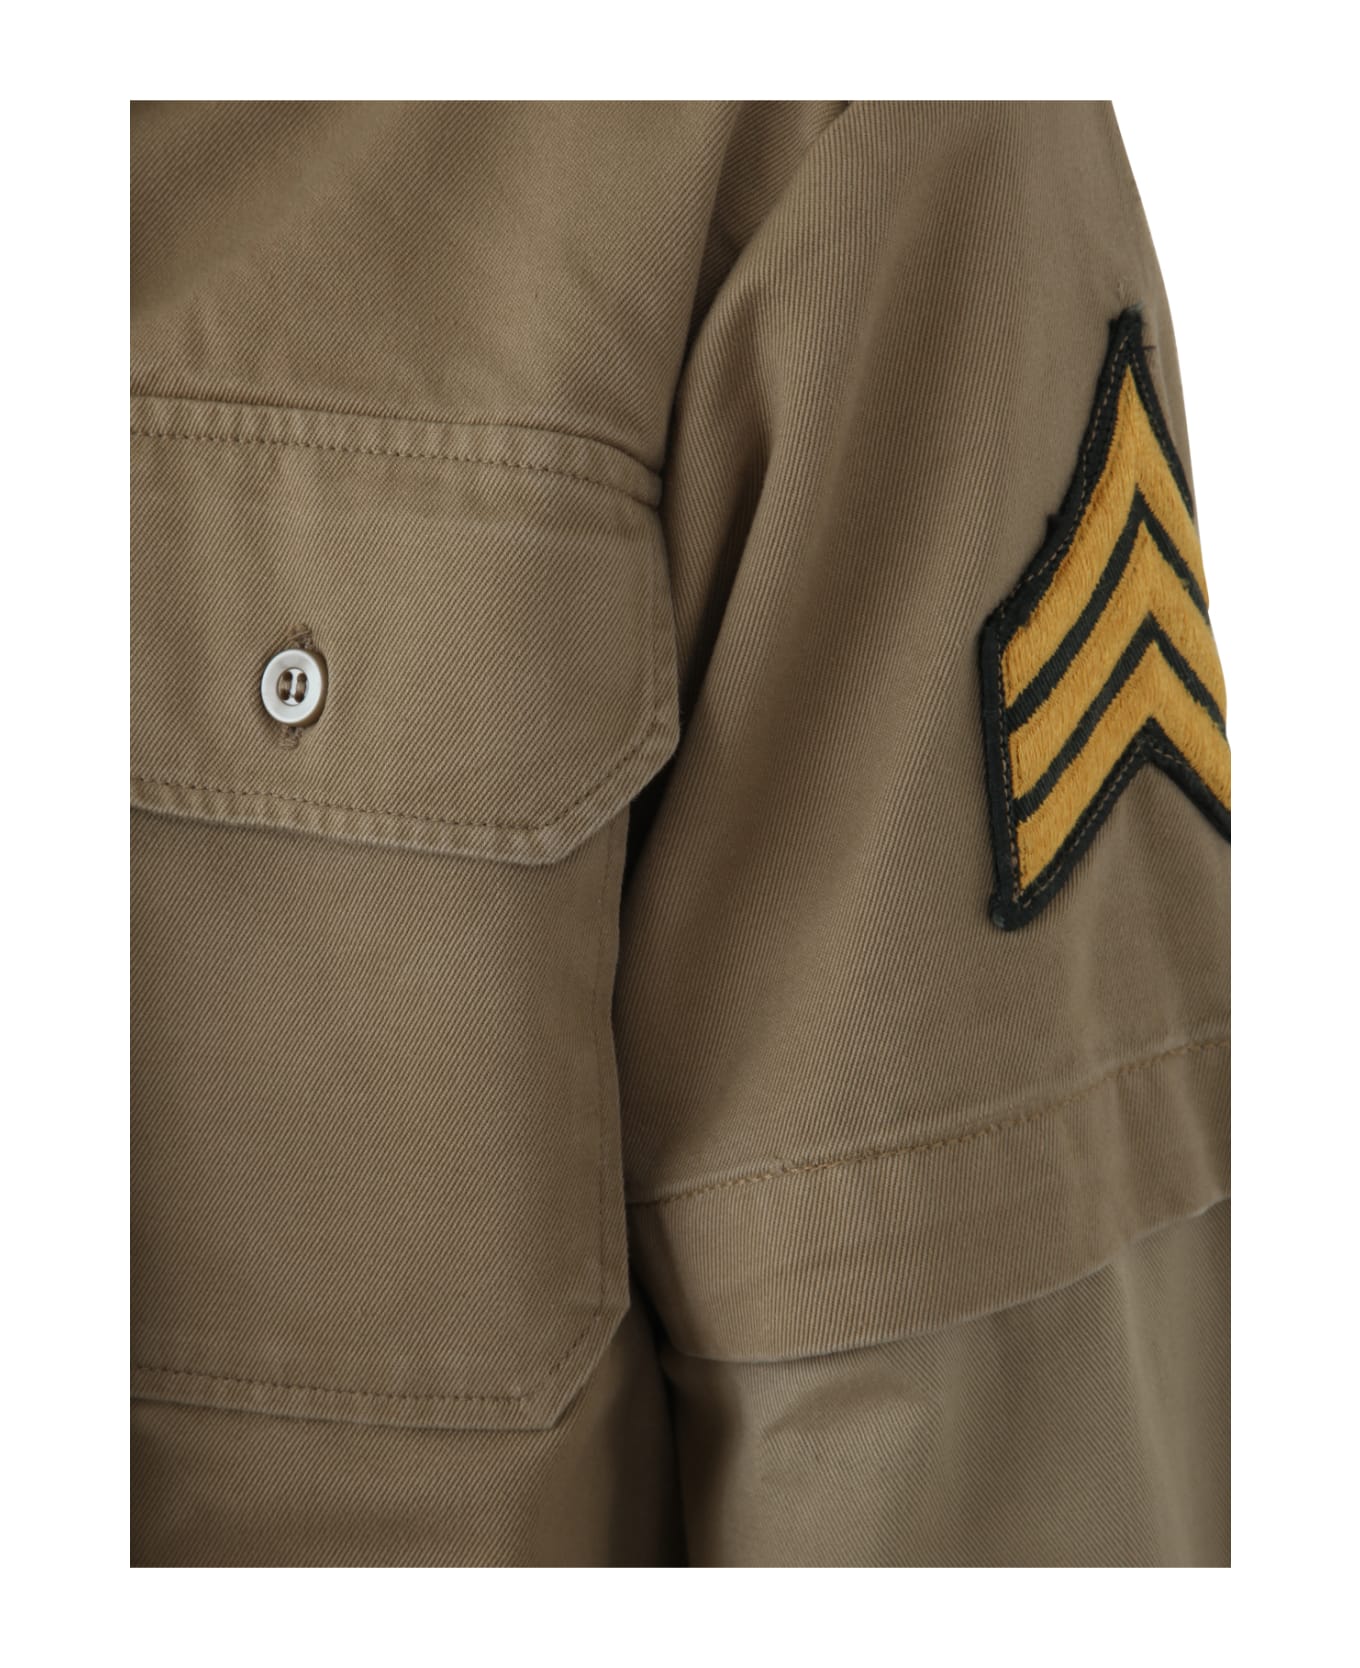 Greg Lauren Khaki Uniform Gl1 Jacket - Tan